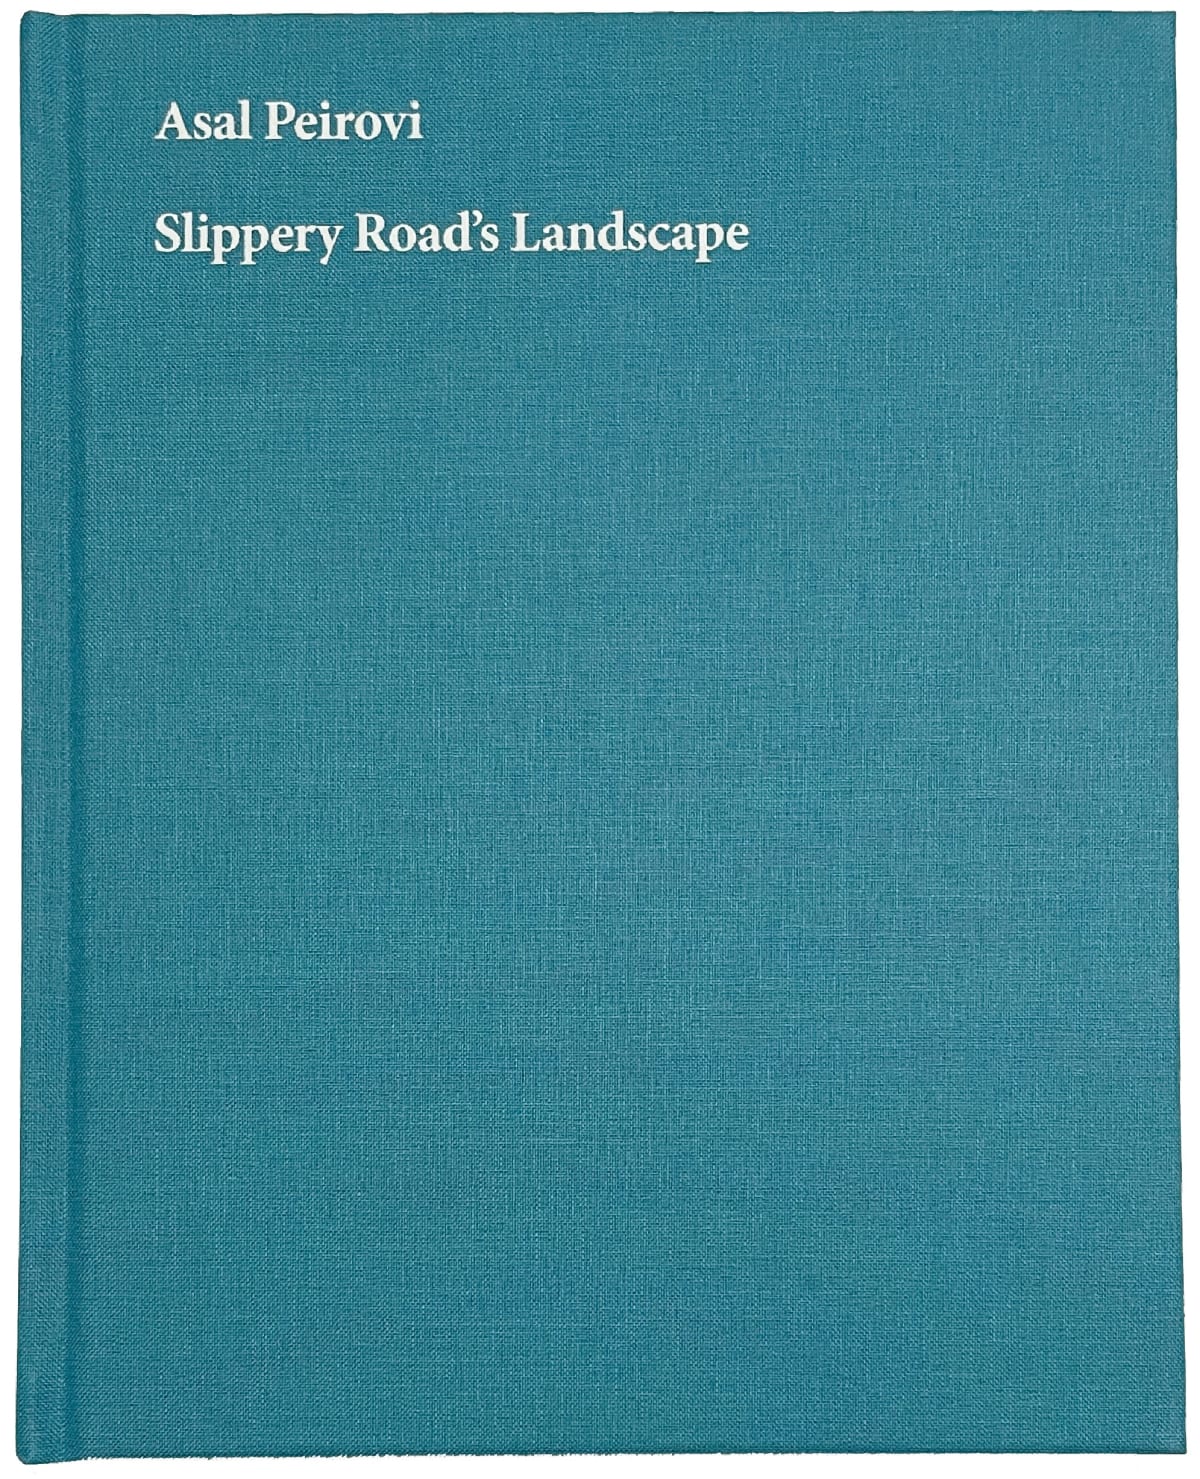 Slippery Road's Landscape